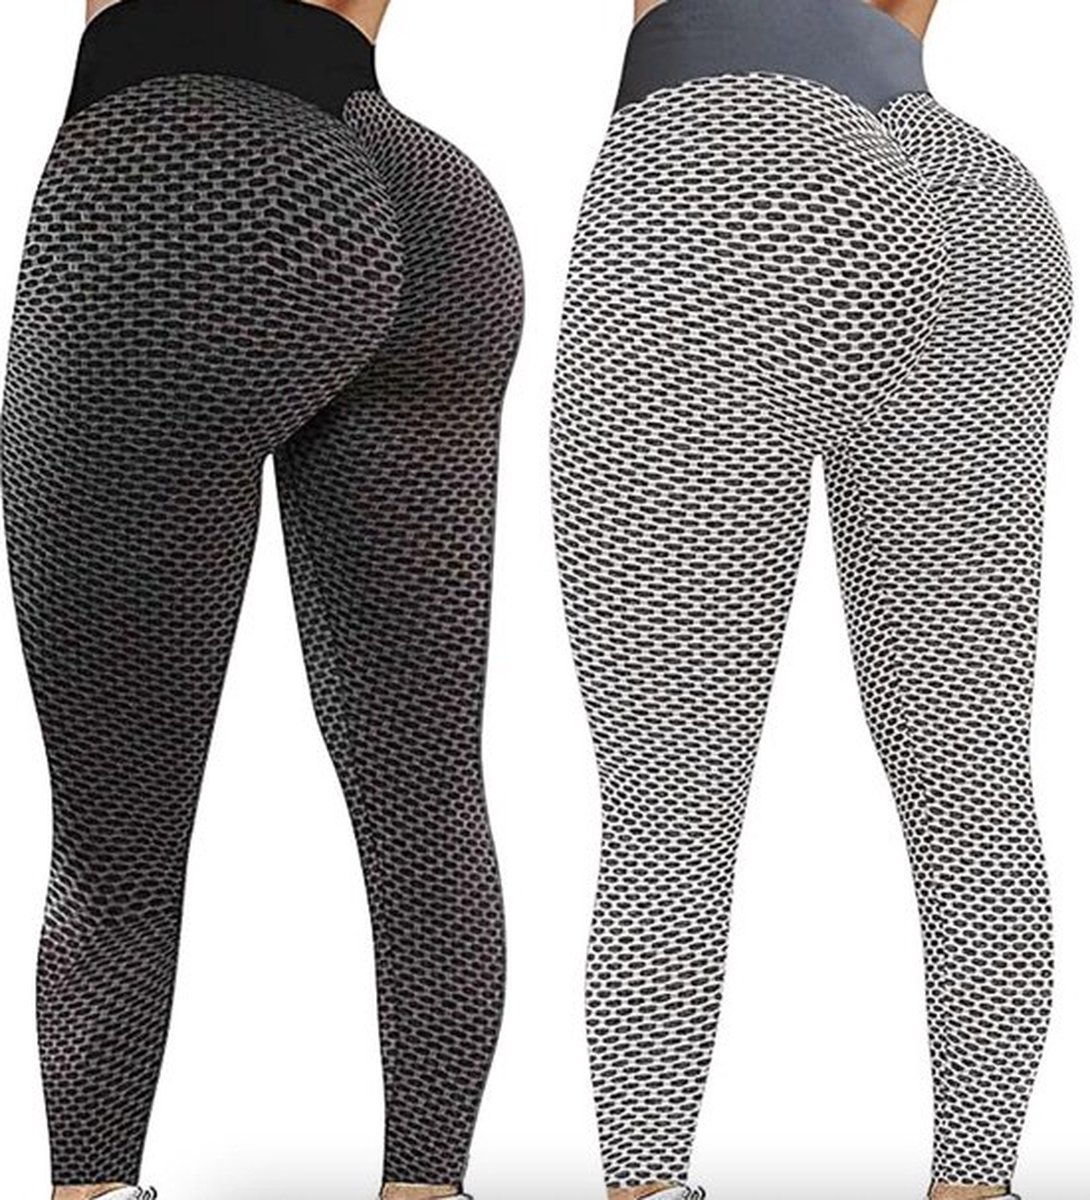 Sportlegging dames 2STUKS XL – legging dames meisje - Tiktok legging – zwart & grijs